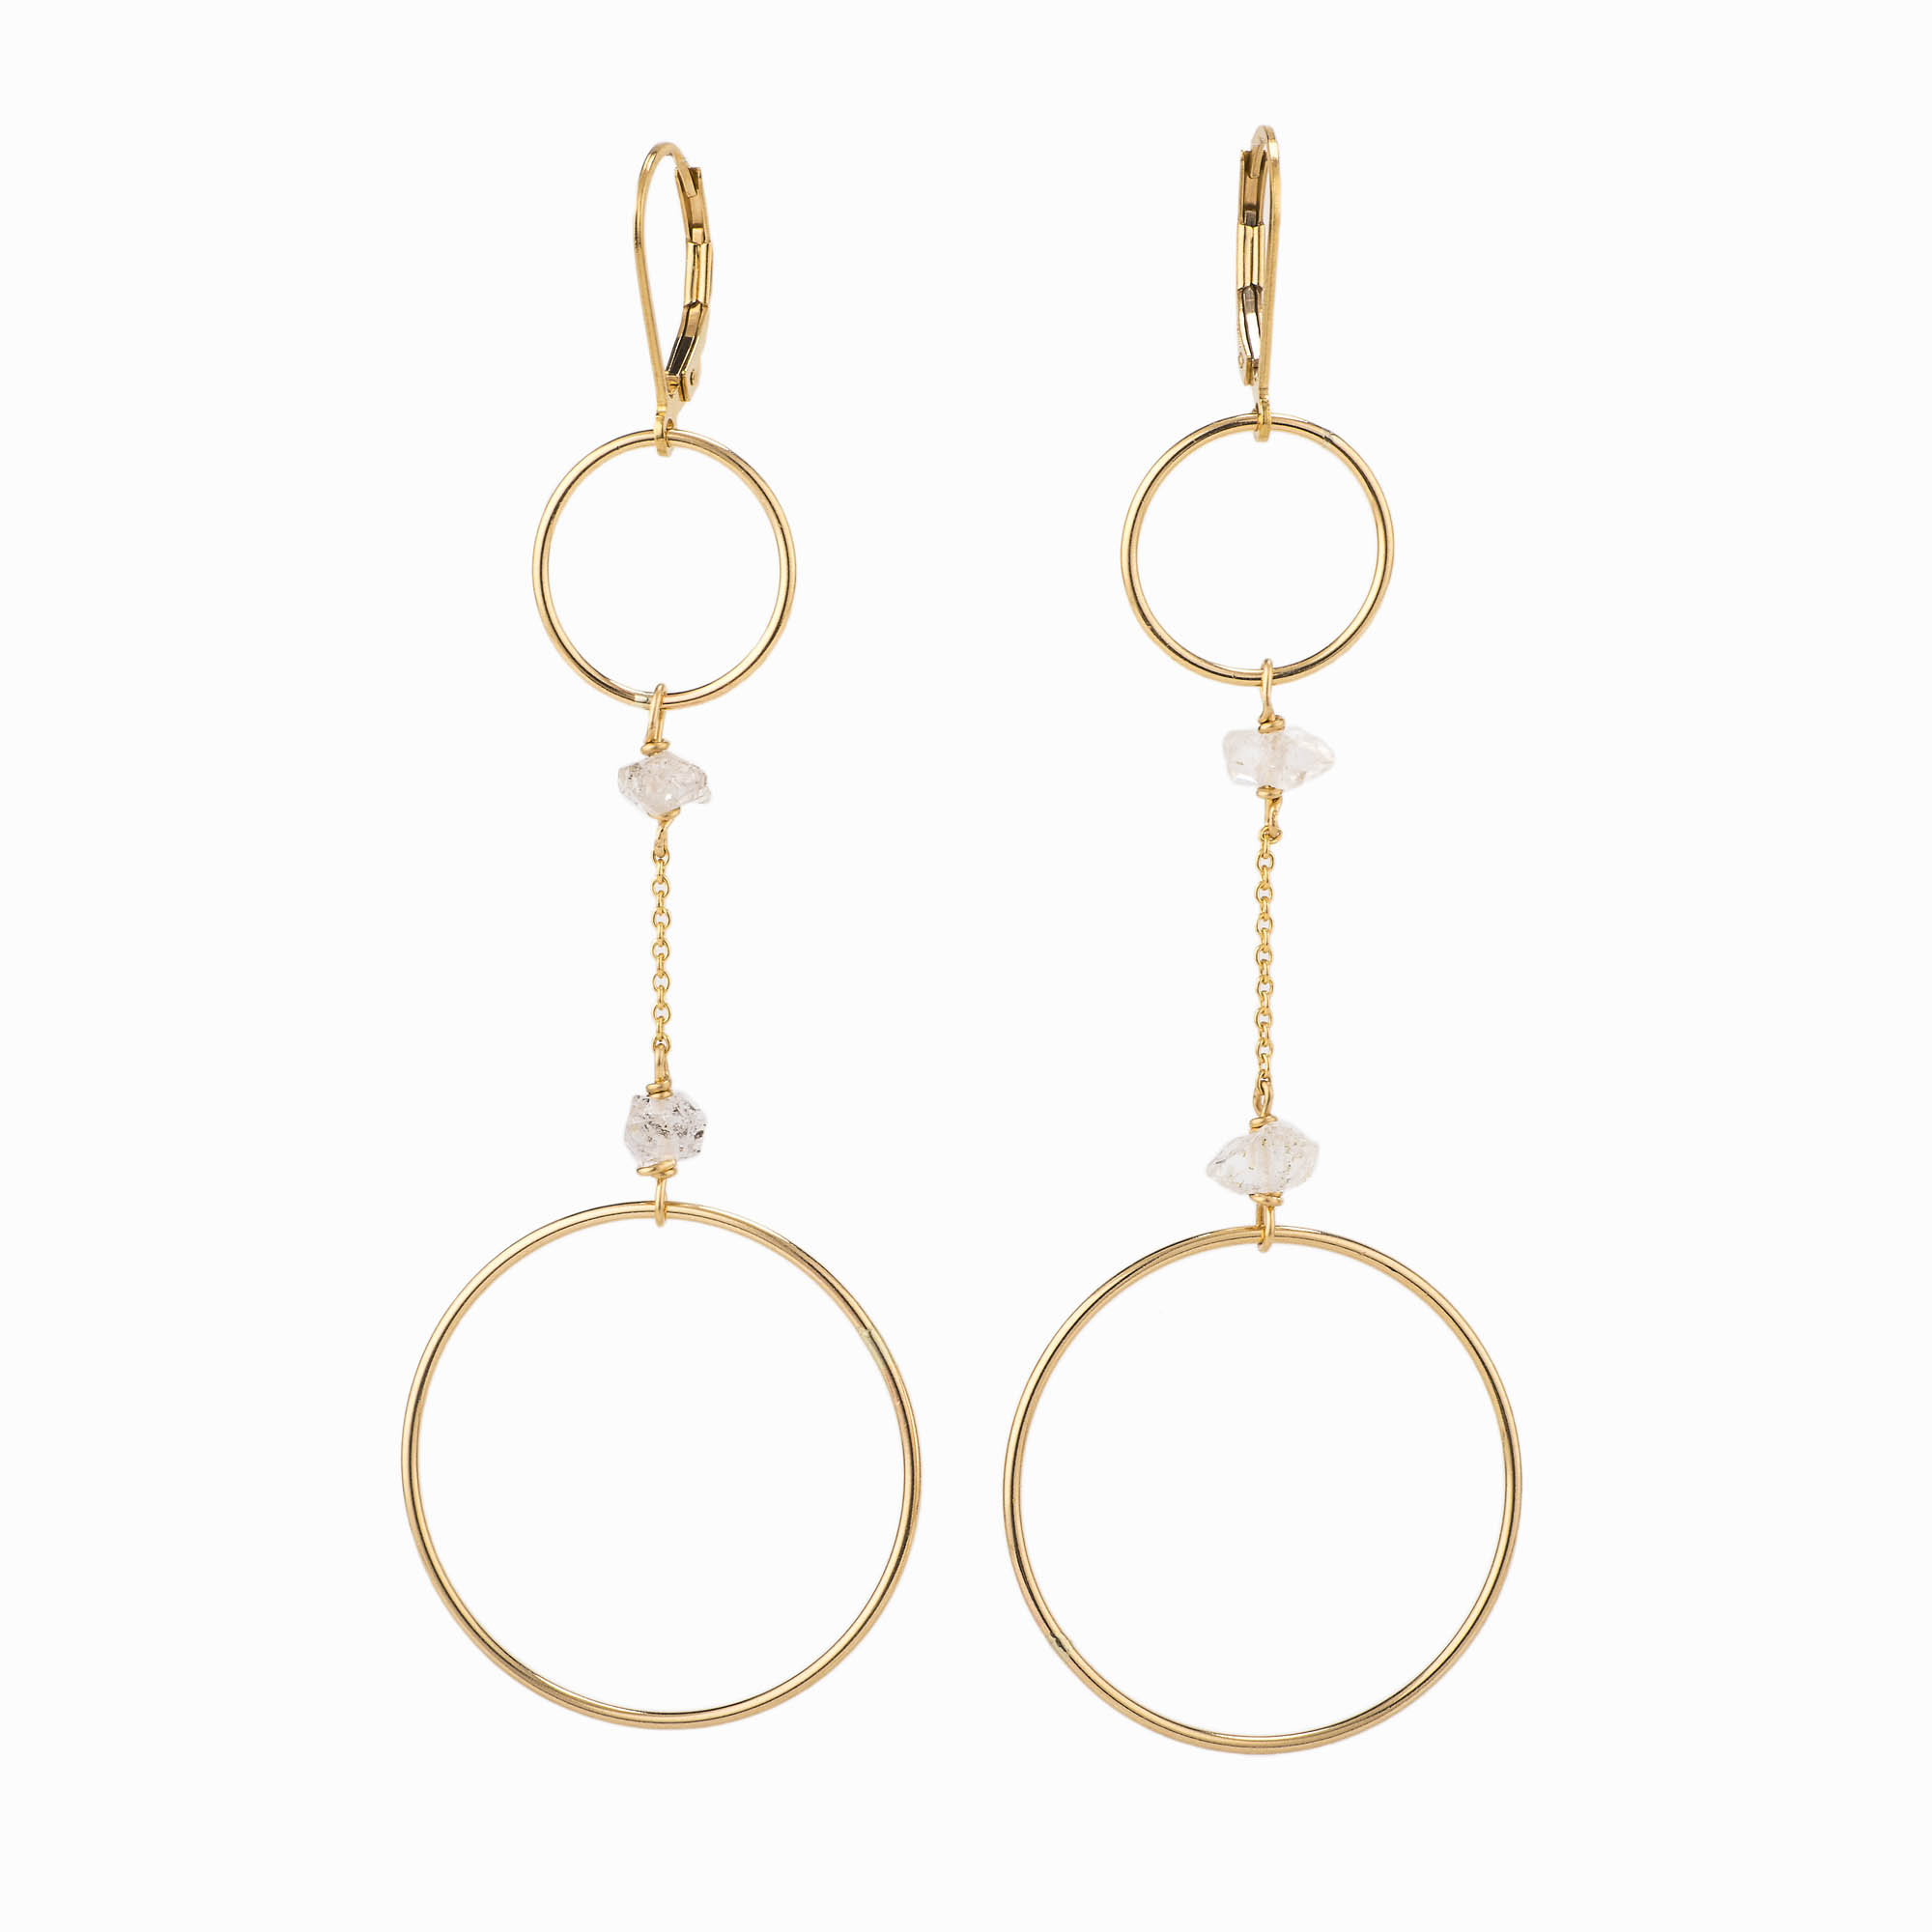 Featured image for “Primrose Gold Hoop Earrings”